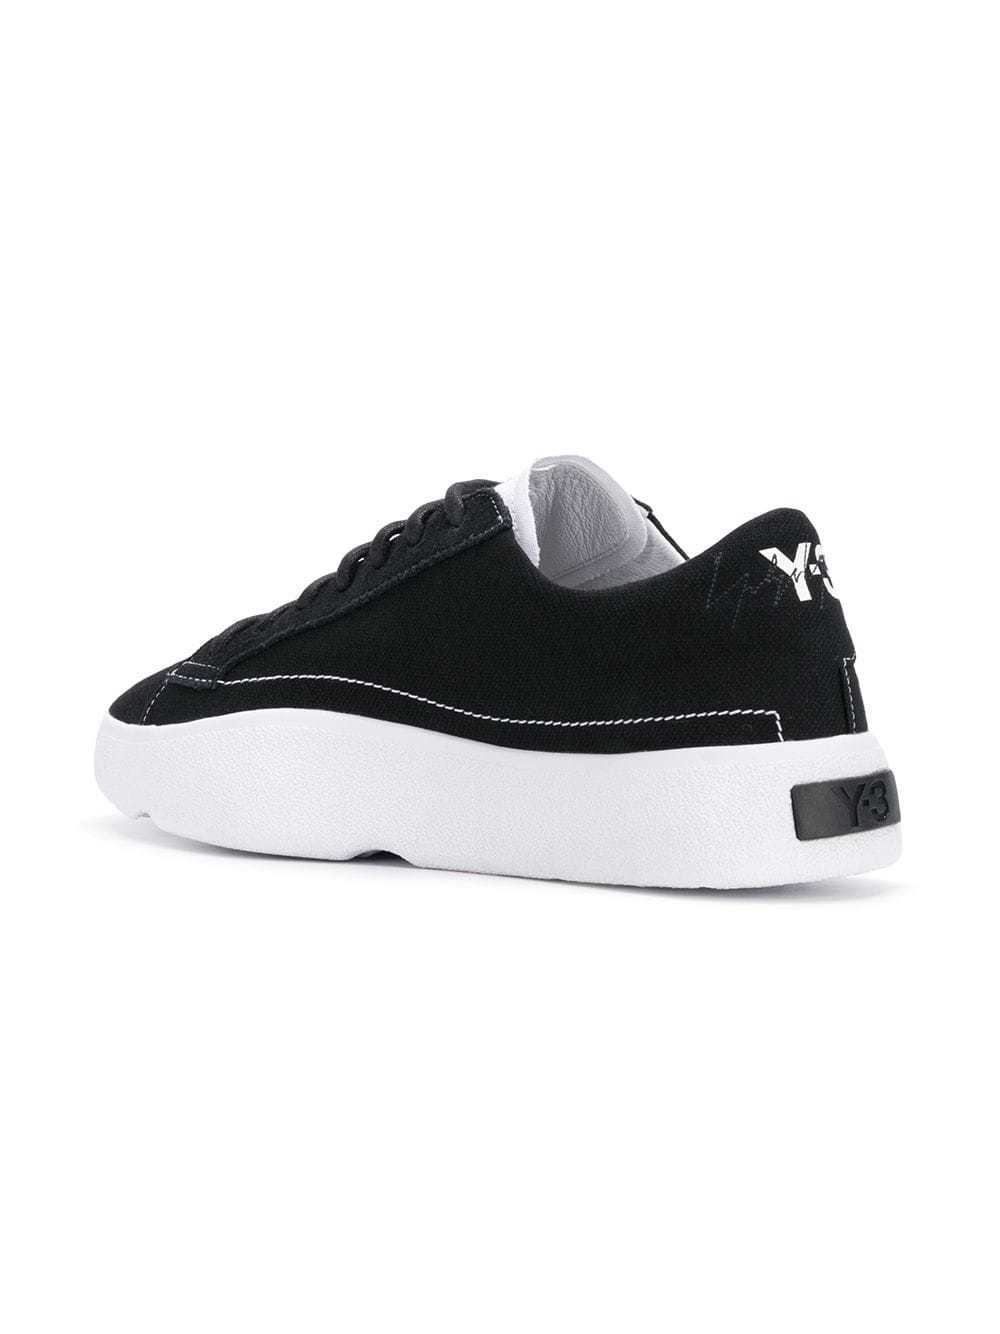 Y-3 Tangutsu Lace Sneakers, $215 